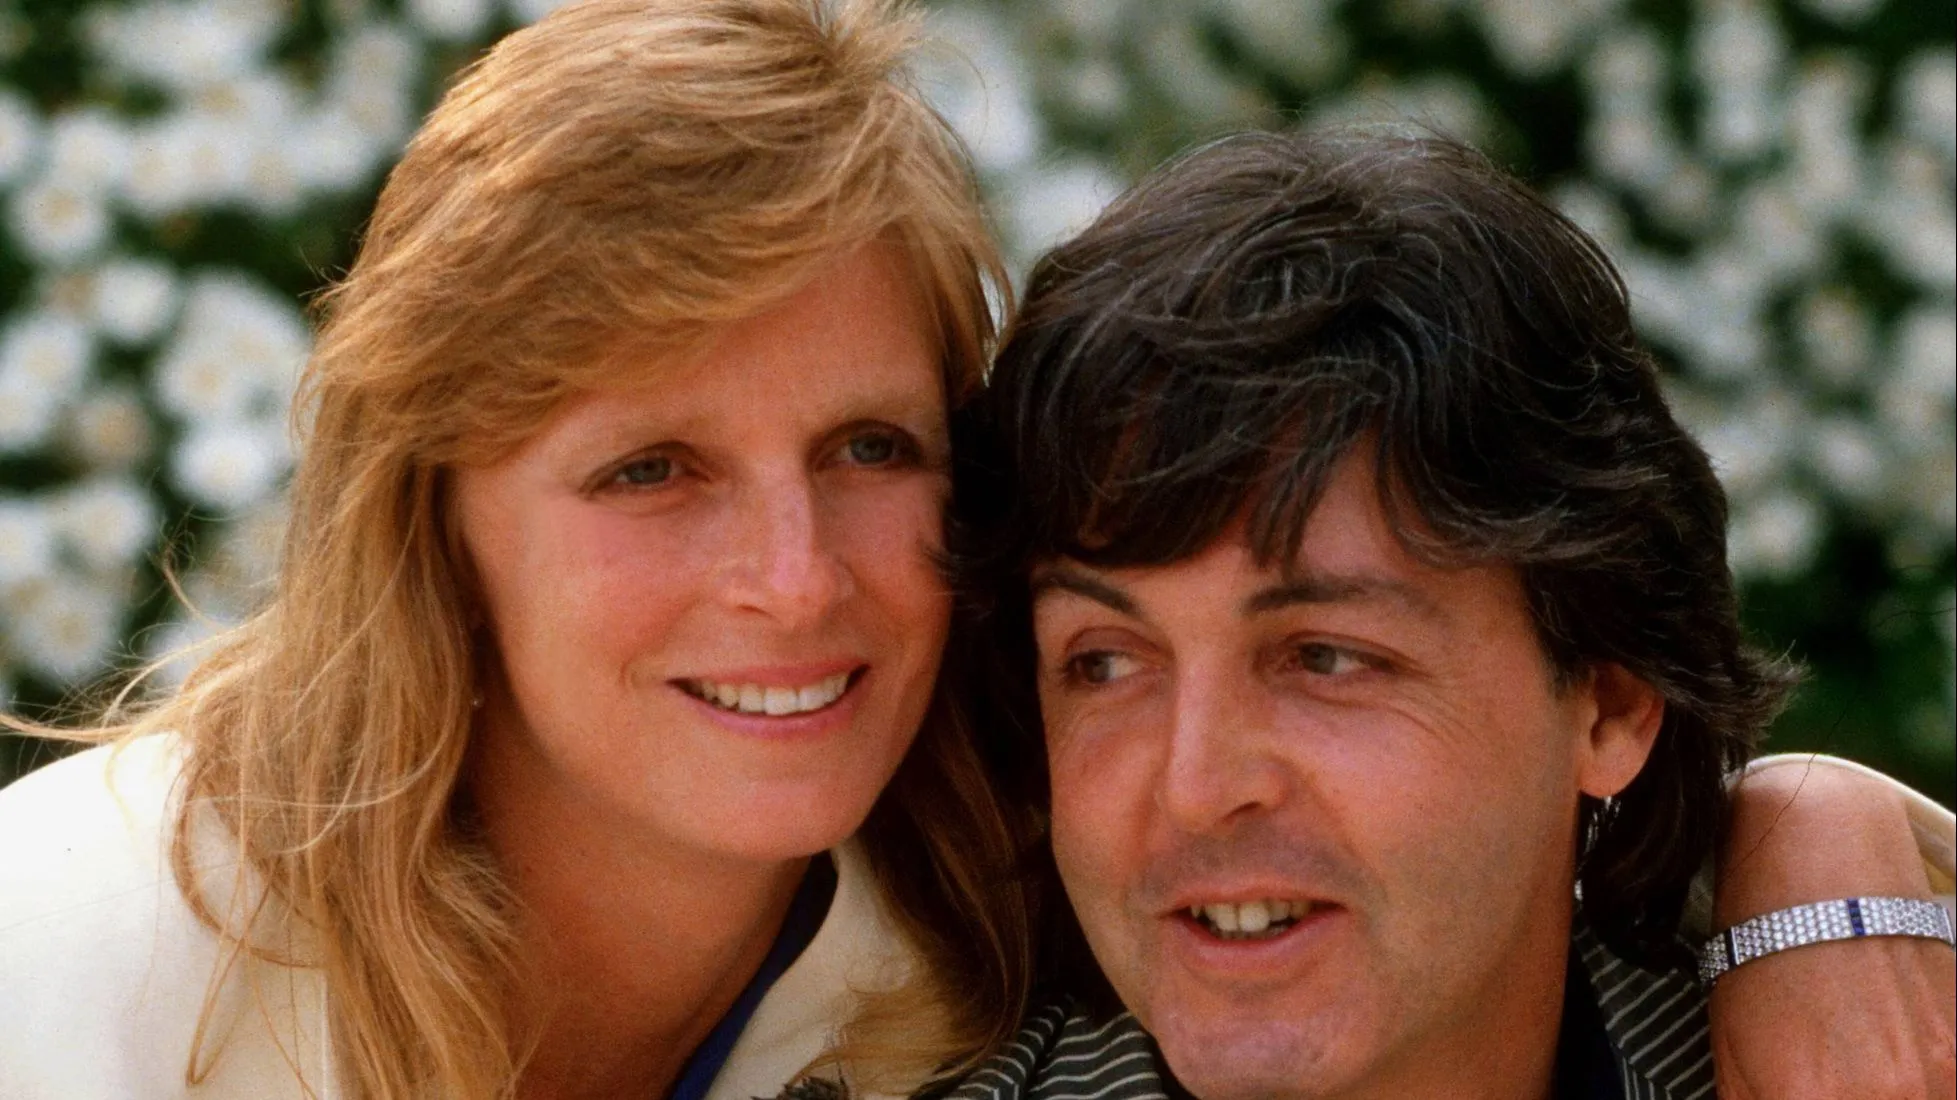 Paul McCartney and Linda Eastman 